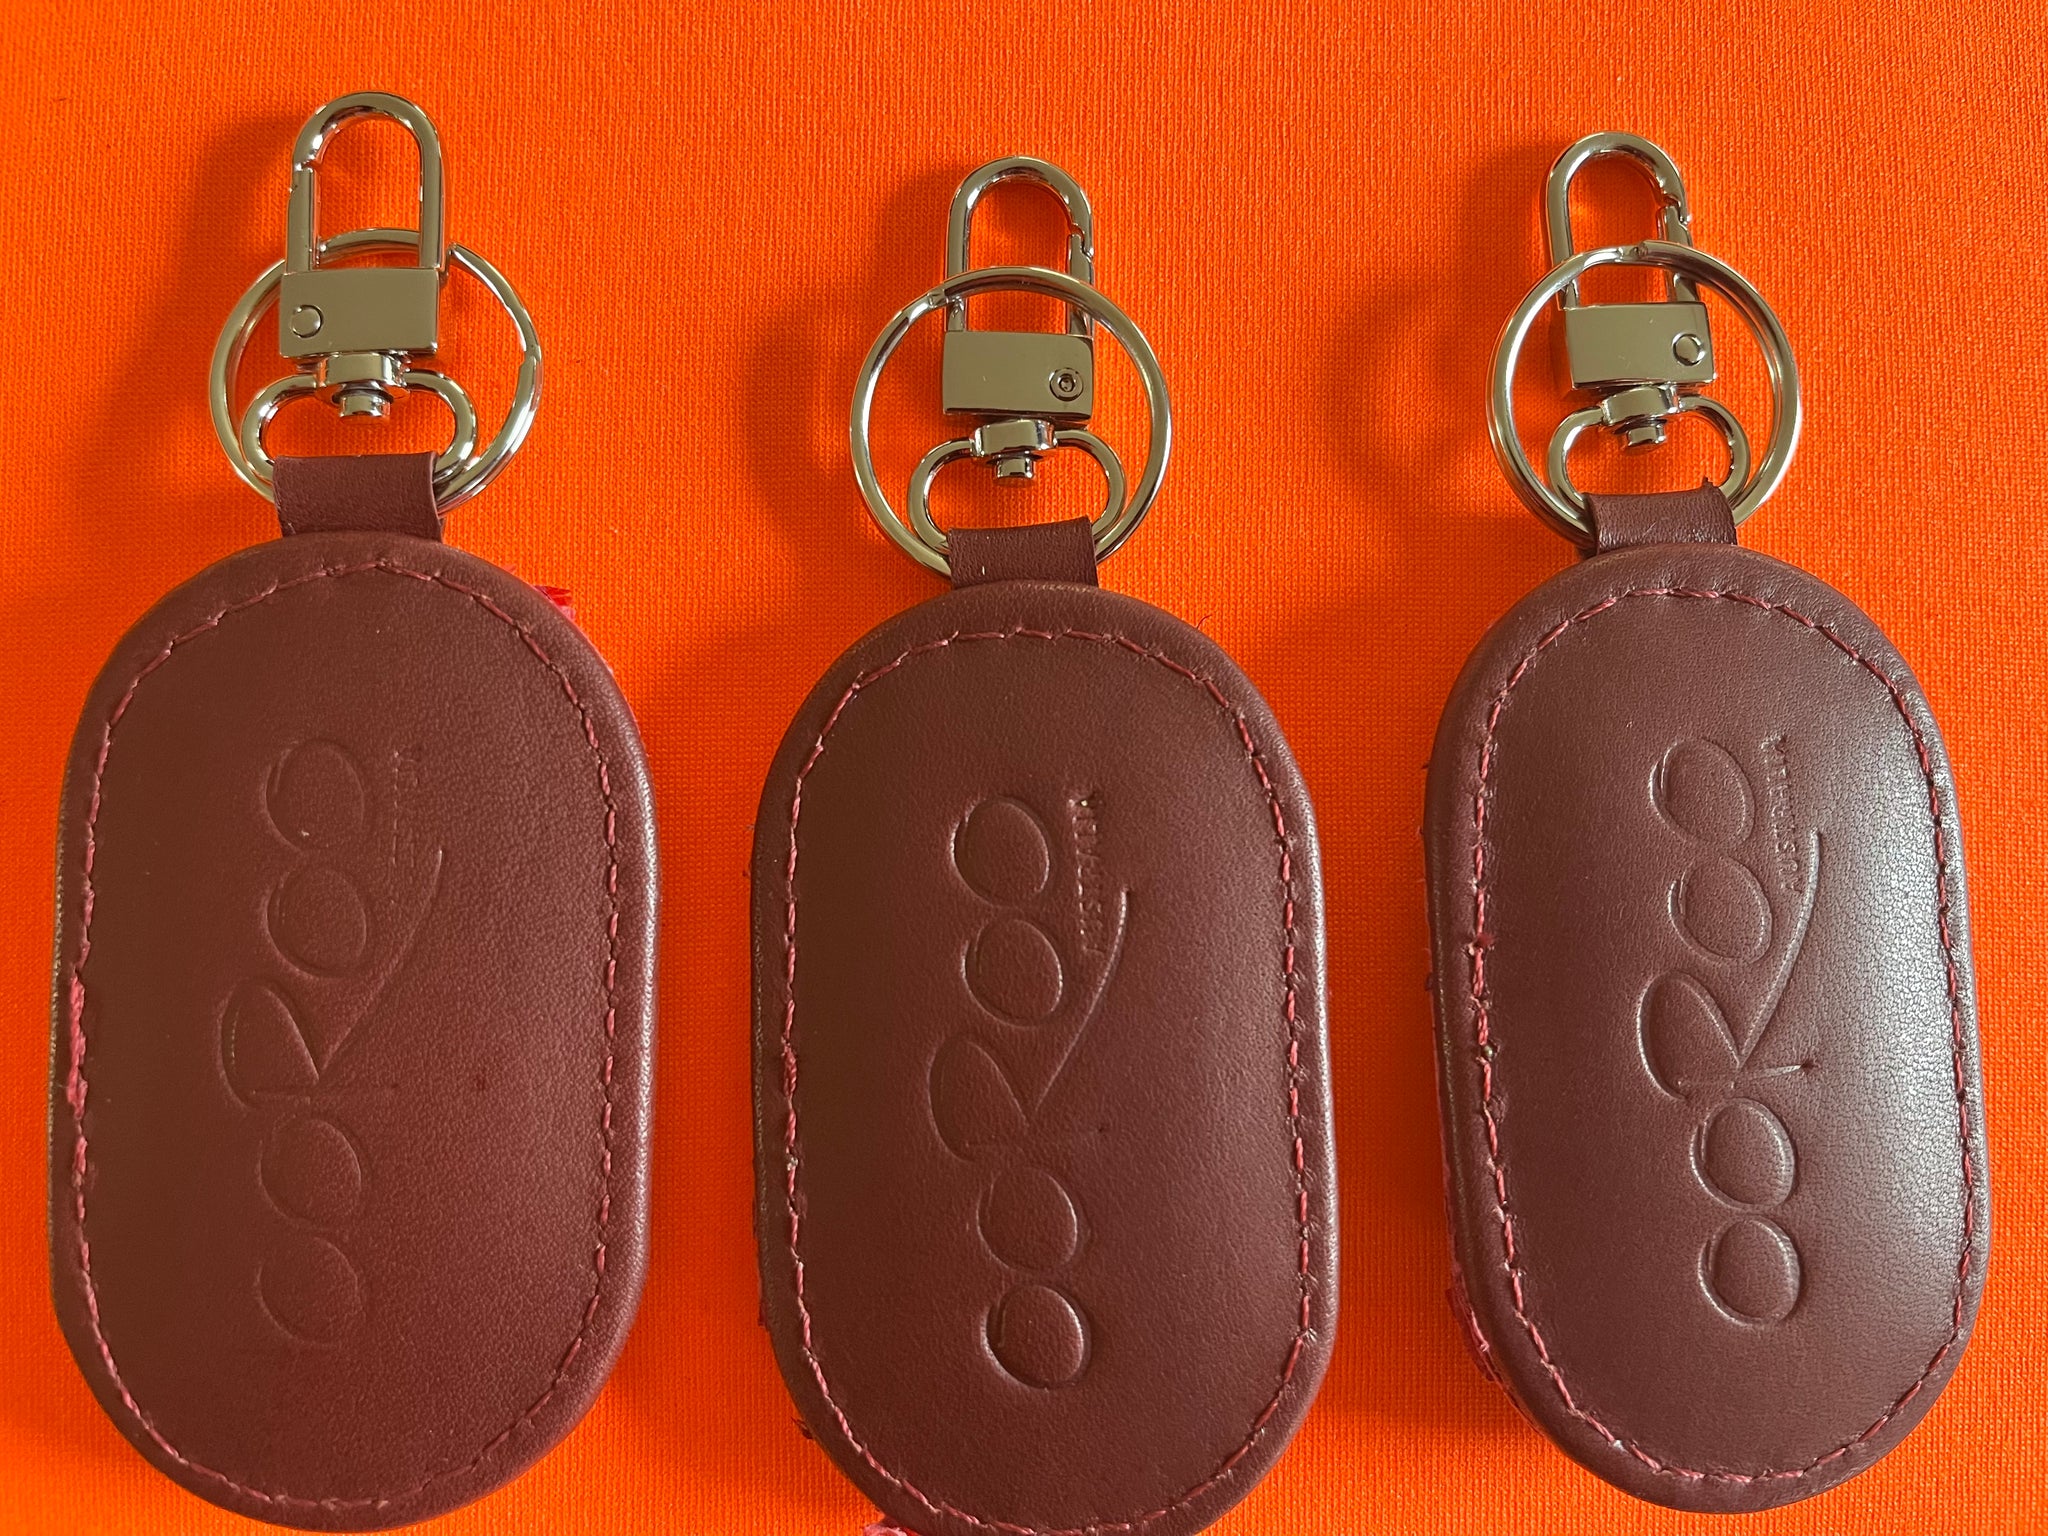 Key Fobs  featuring barramundi leather from the kimberly WA - Fuchsia Ruffled Deep Cherry Red leather.